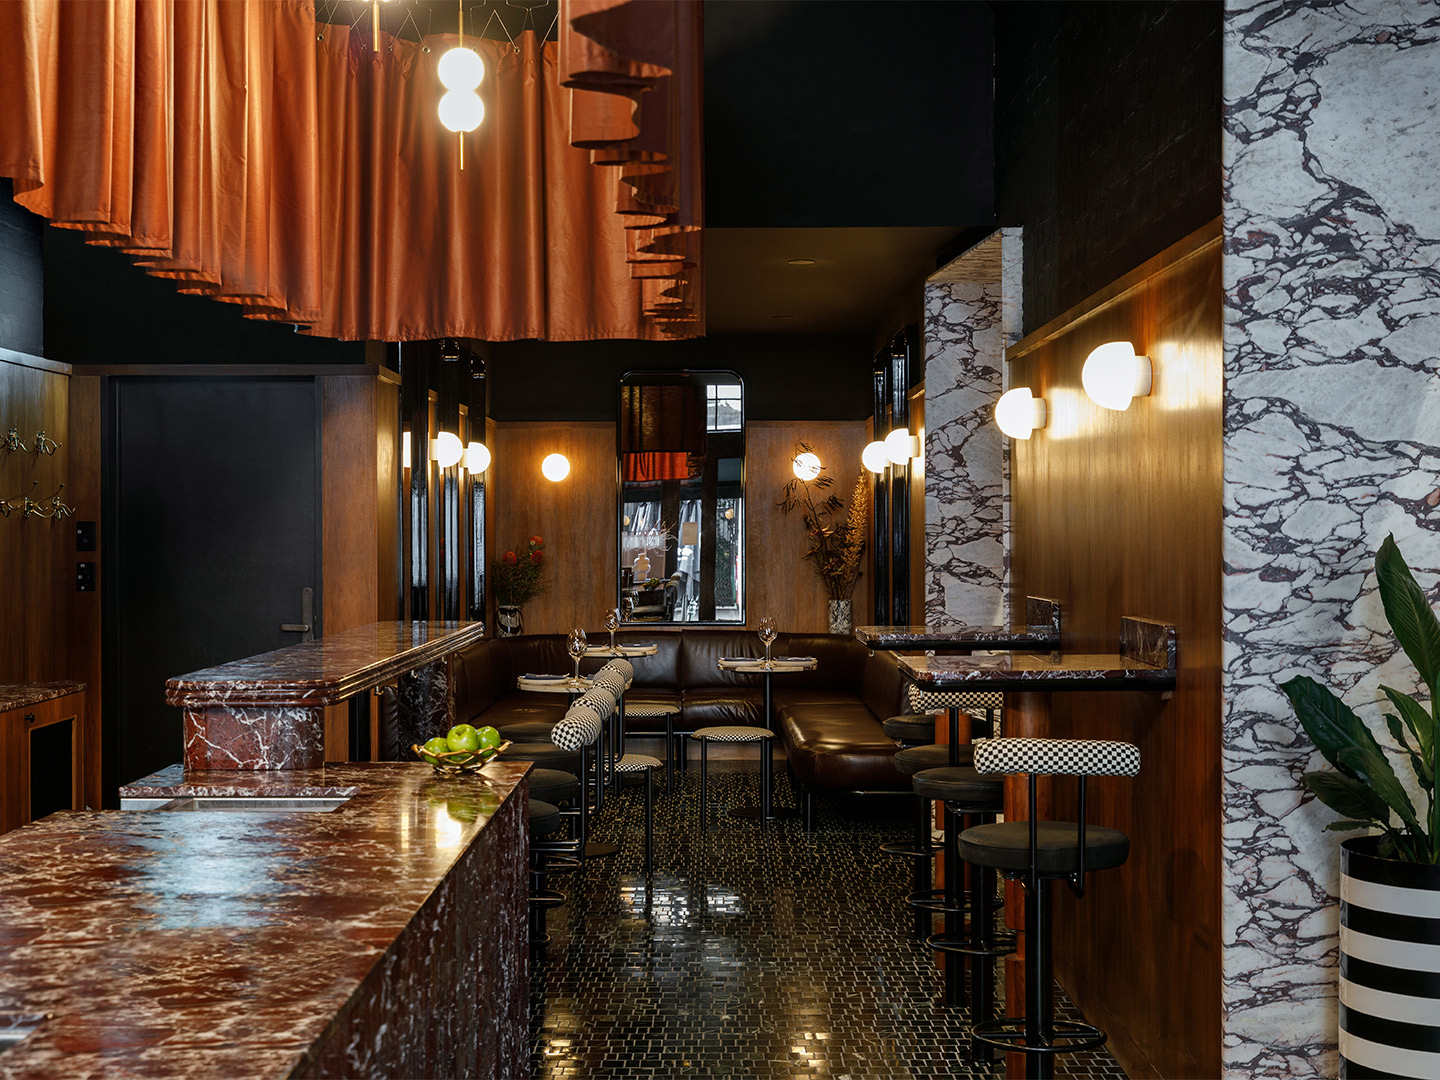 Fugazzi bar and restaurant in Adelaide by Studio-Gram